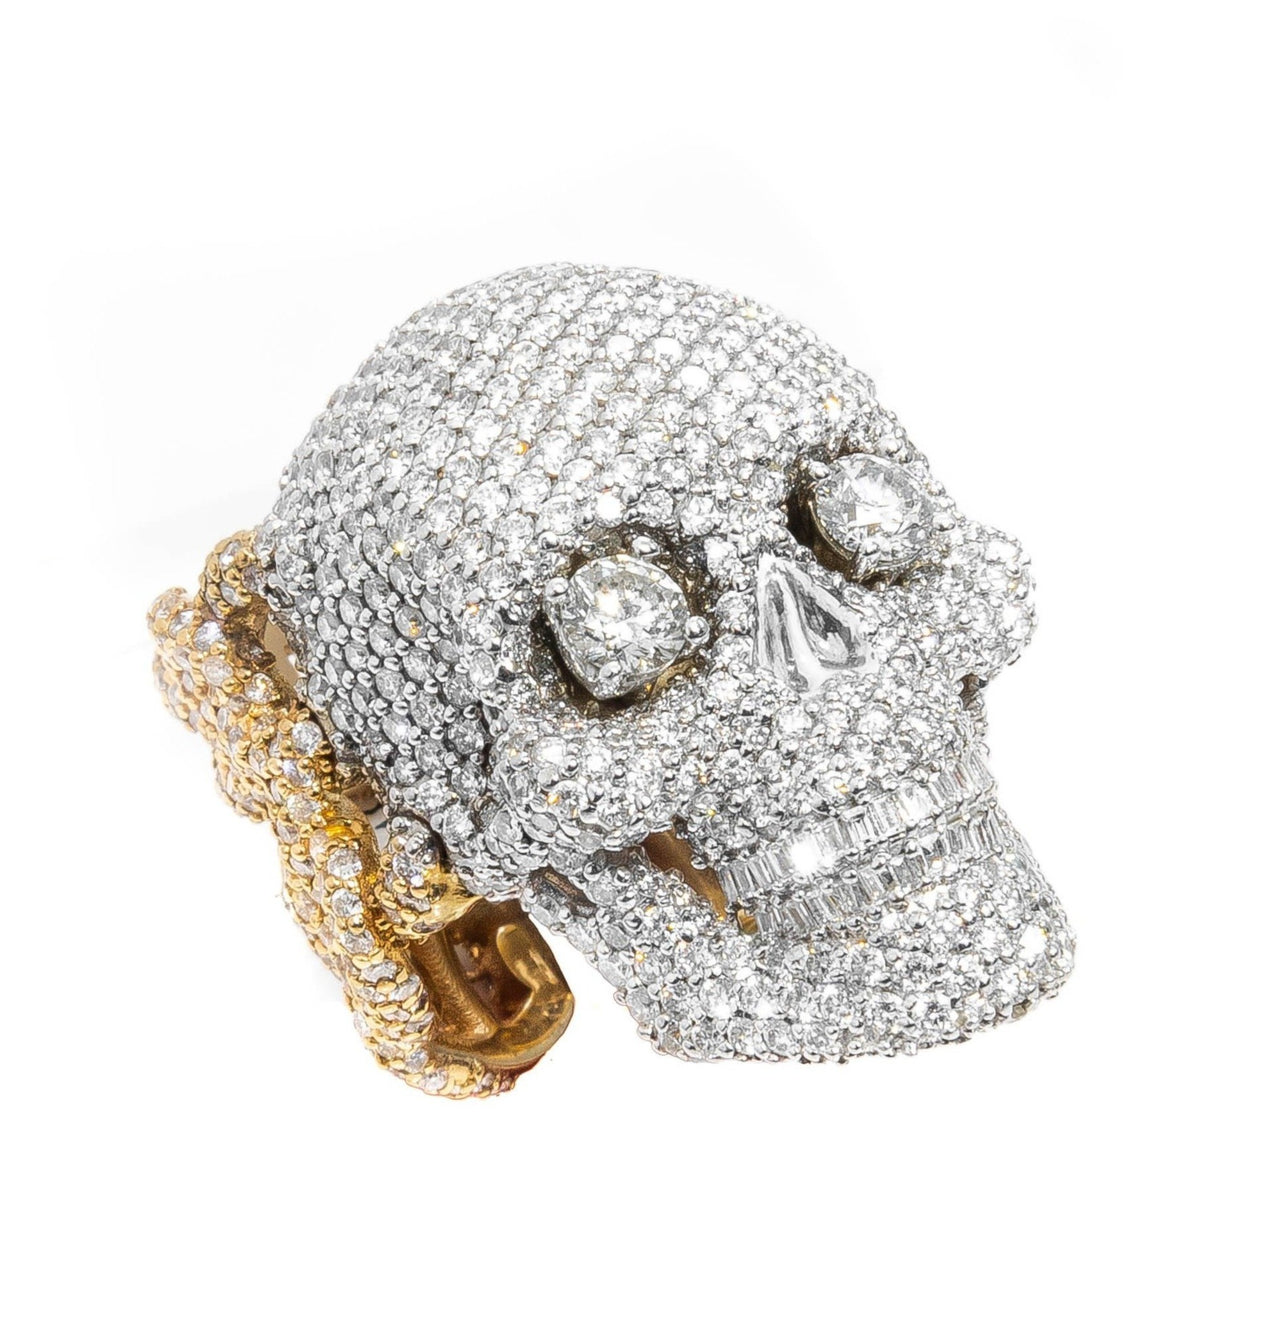 Y/W Diamond Skull Ring 10.06 ctw